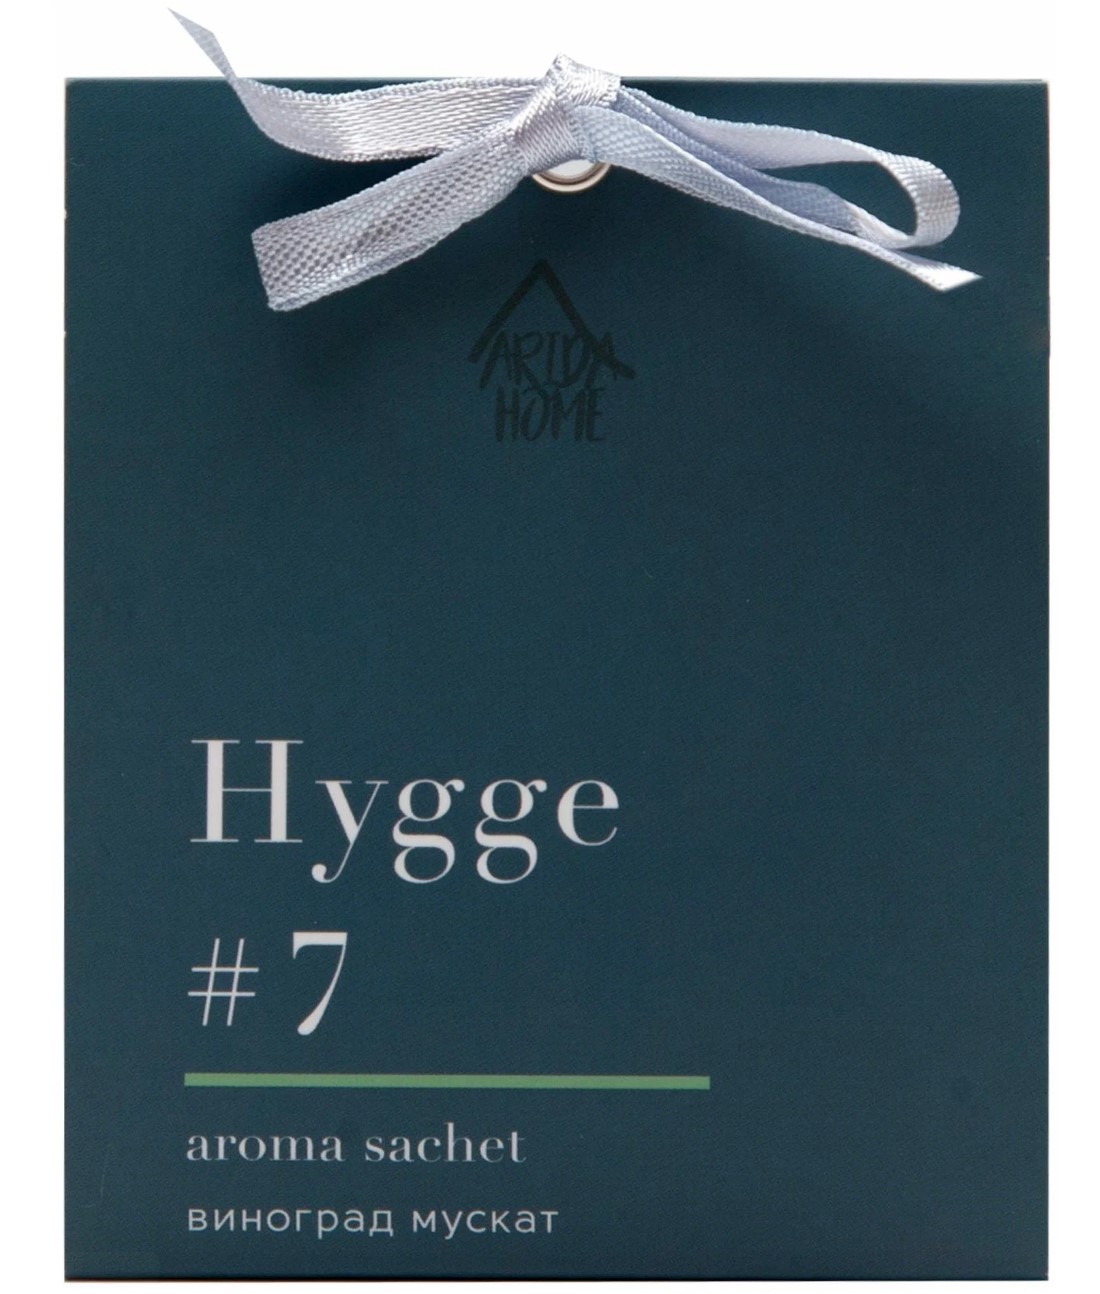 Аромасаше Hygge #7 Виноград мускат, 1539016